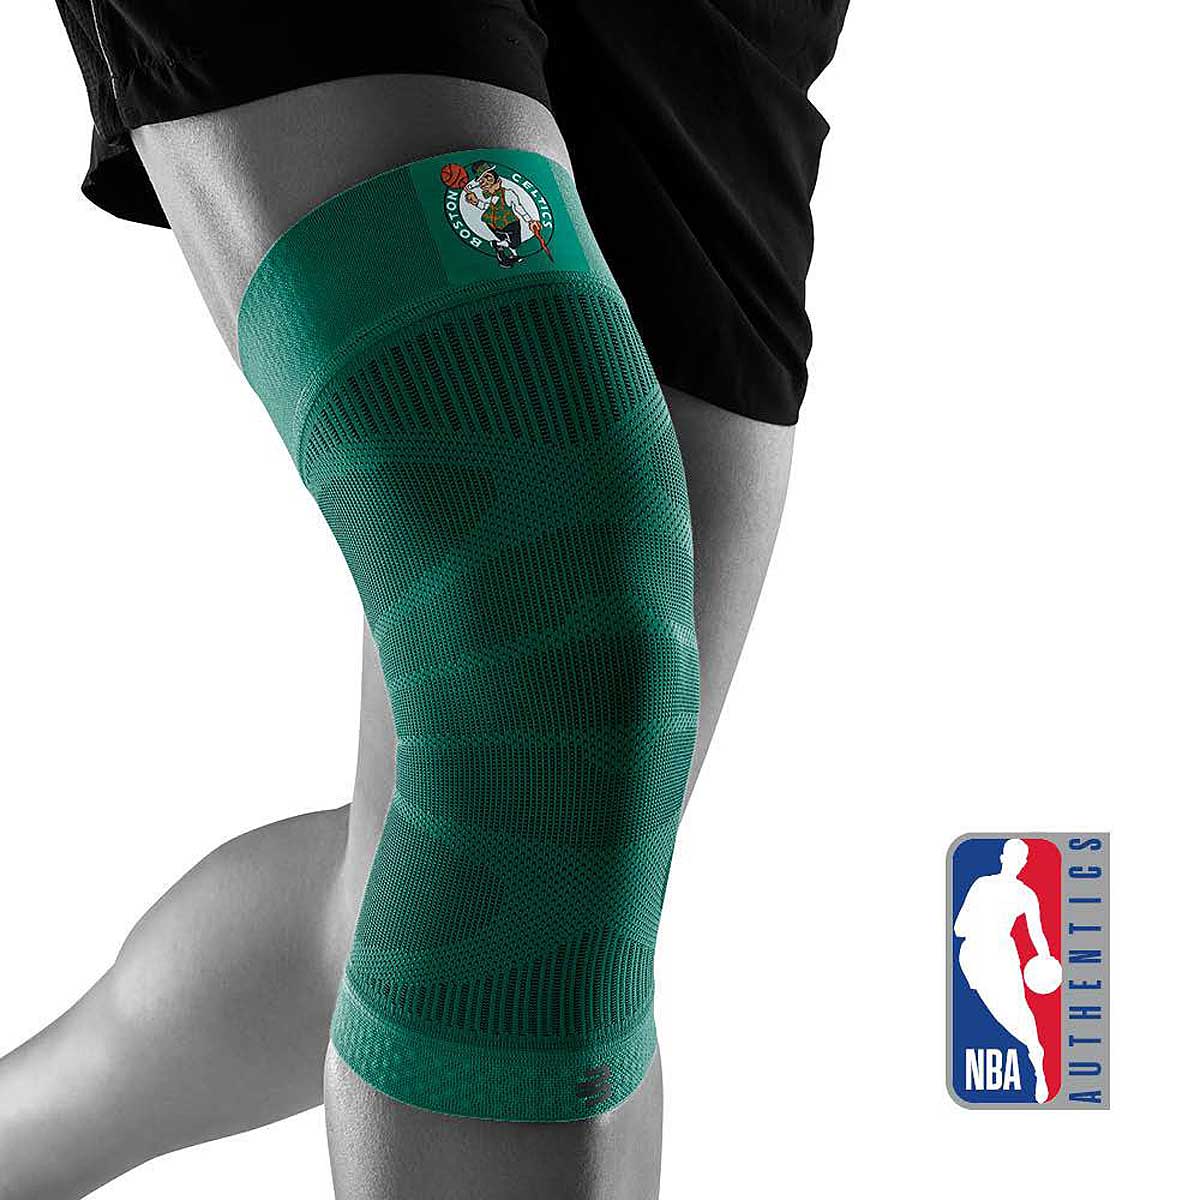 Bauerfeind Nba Sports Compression Knee Support Boston Celtics, Celtics Green